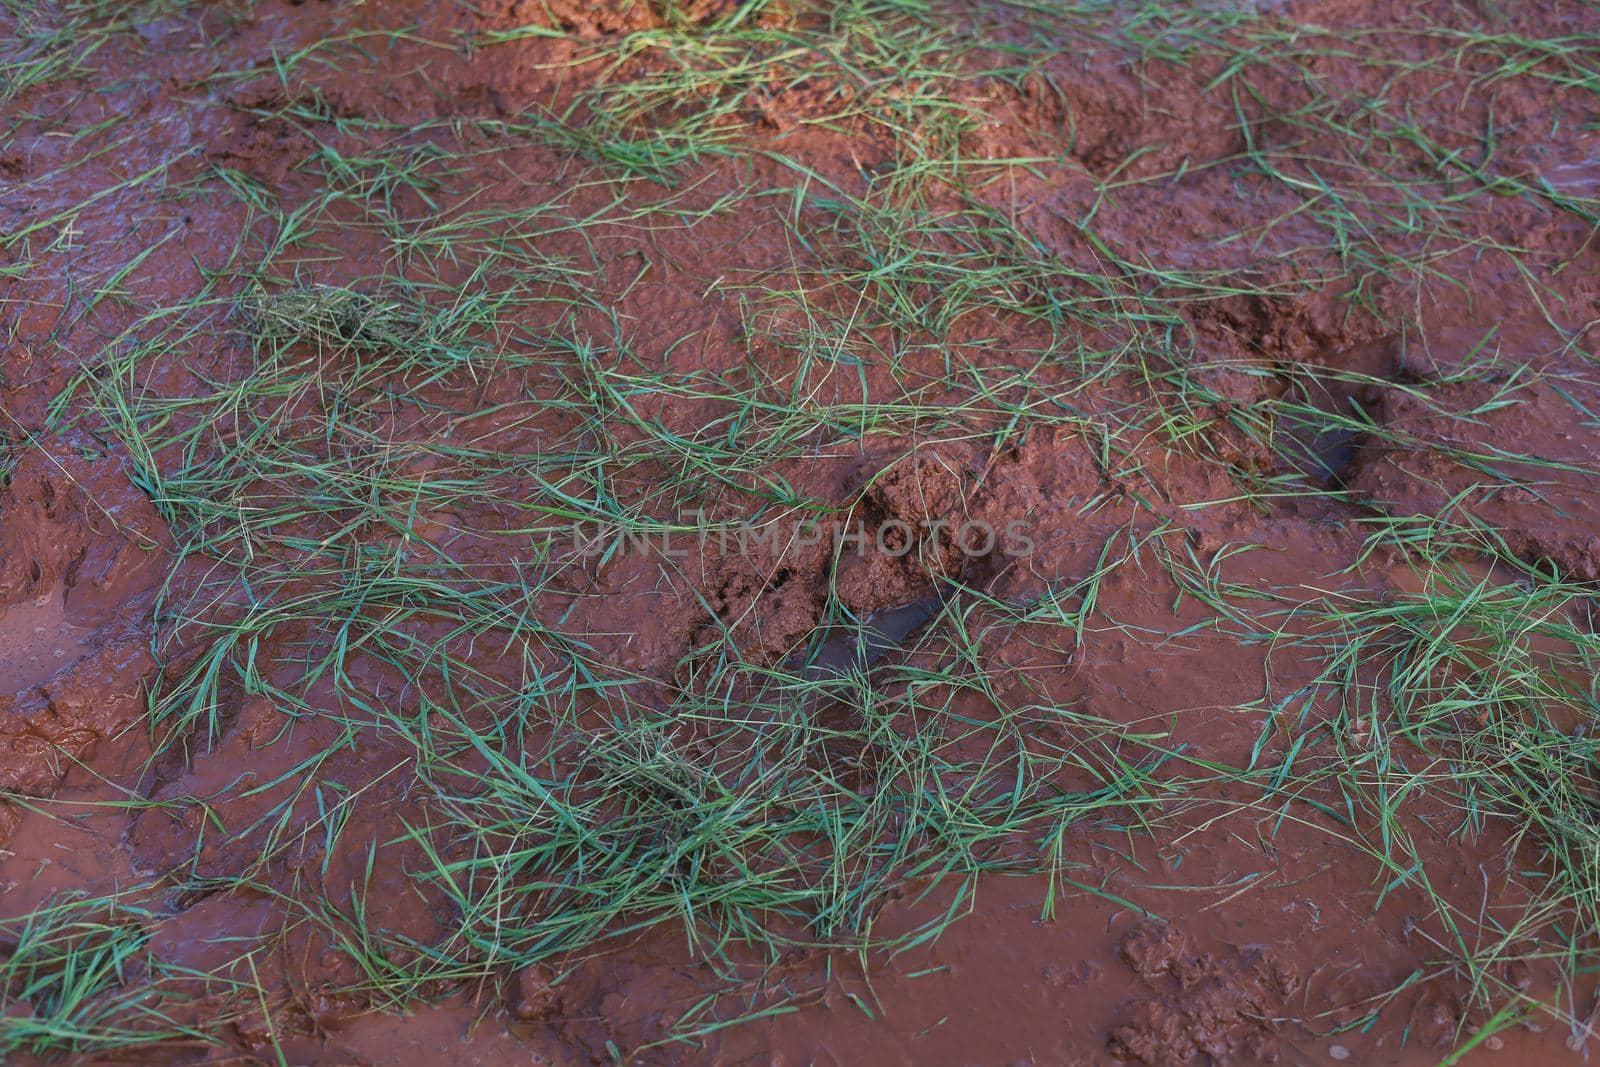 Pangular grass growing in the mud